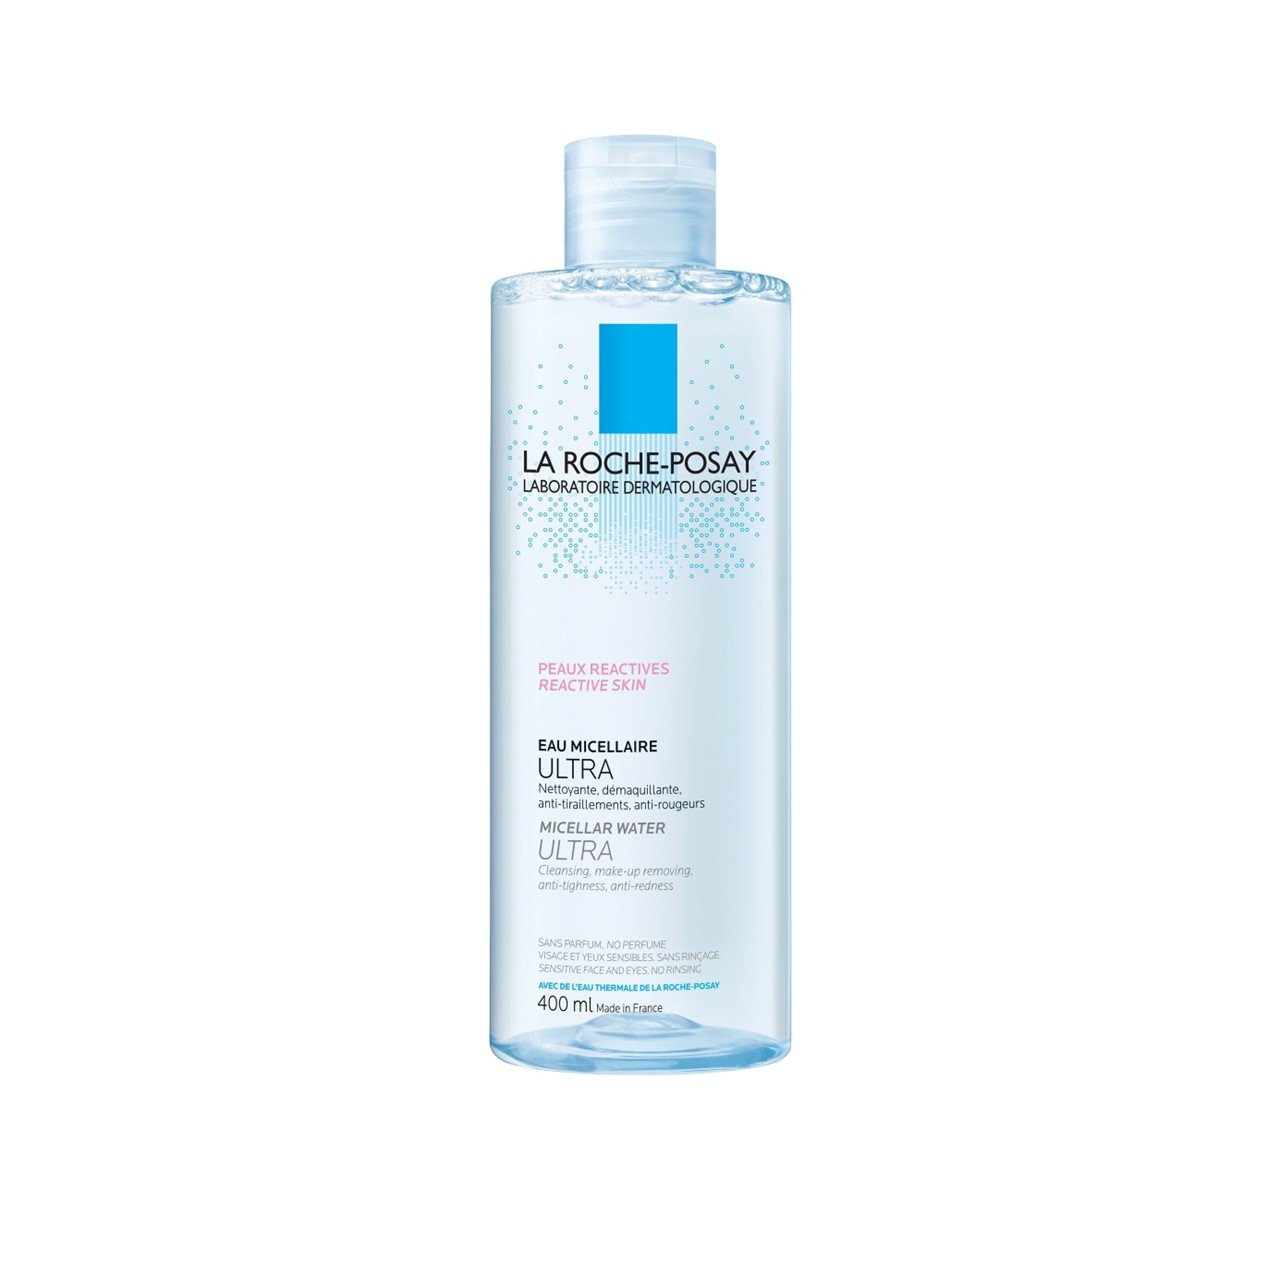 La Roche-Posay Micellar Water Ultra Reactive Skin 400ml (13.53fl oz)